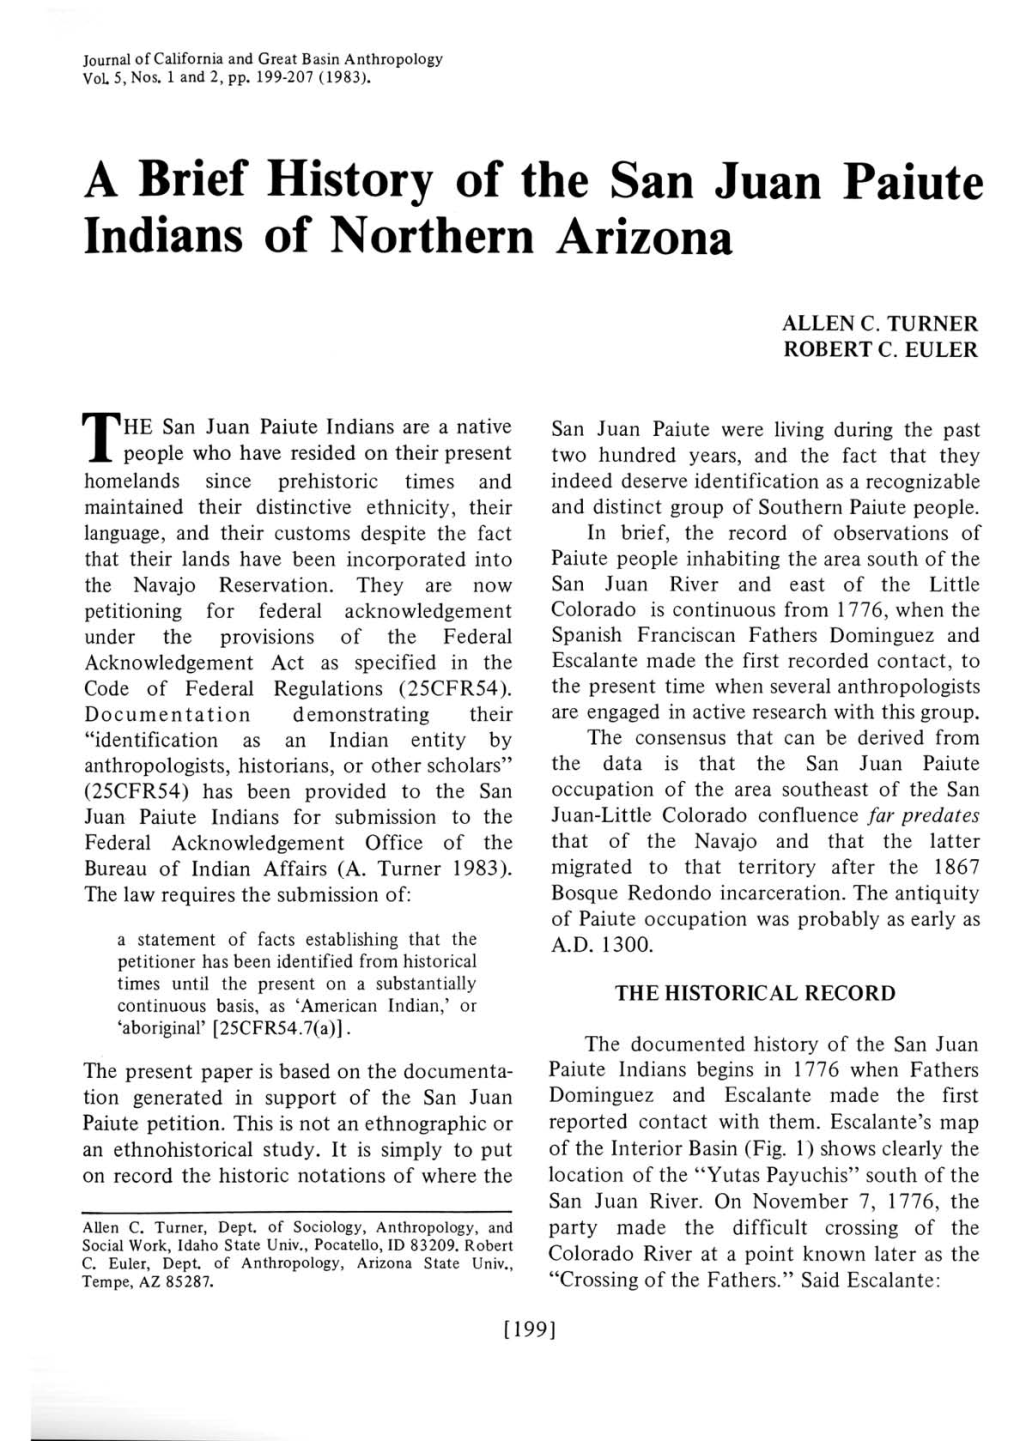 A Brief History of the San Juan Paiute Indians of Northern Arizona